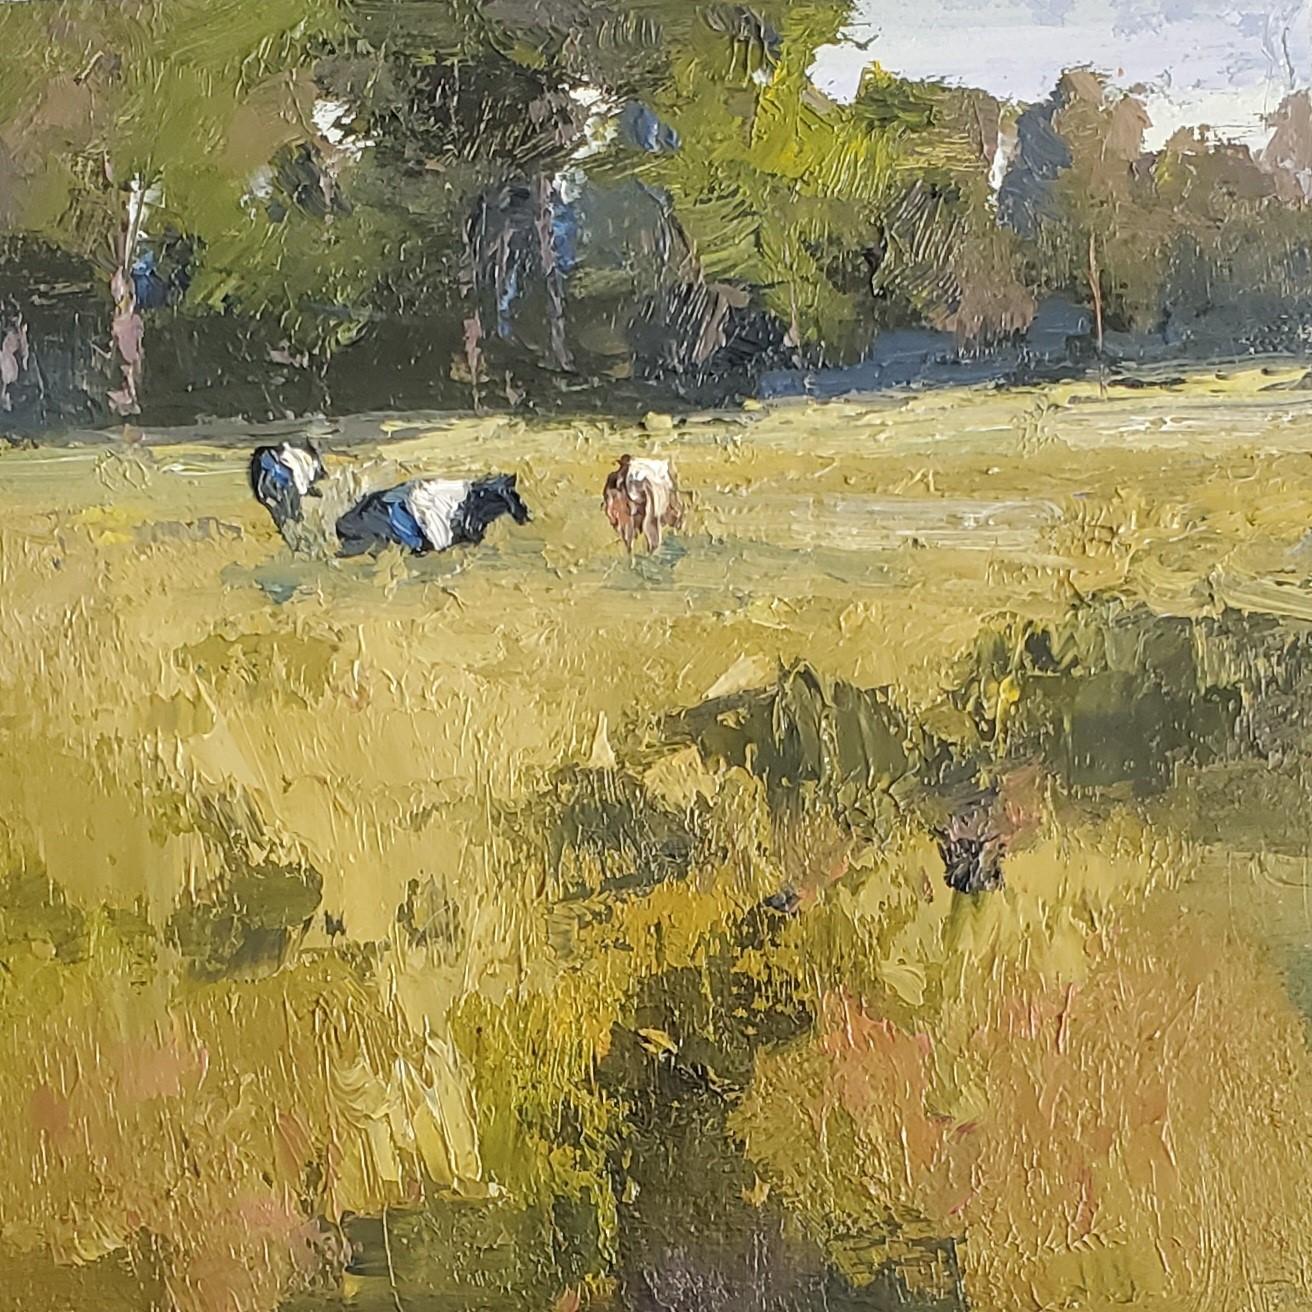 Bethanne Kinsella Cople Landscape Painting - Fall Cows by Bethanne Cople, Oil on Board Landscape painting